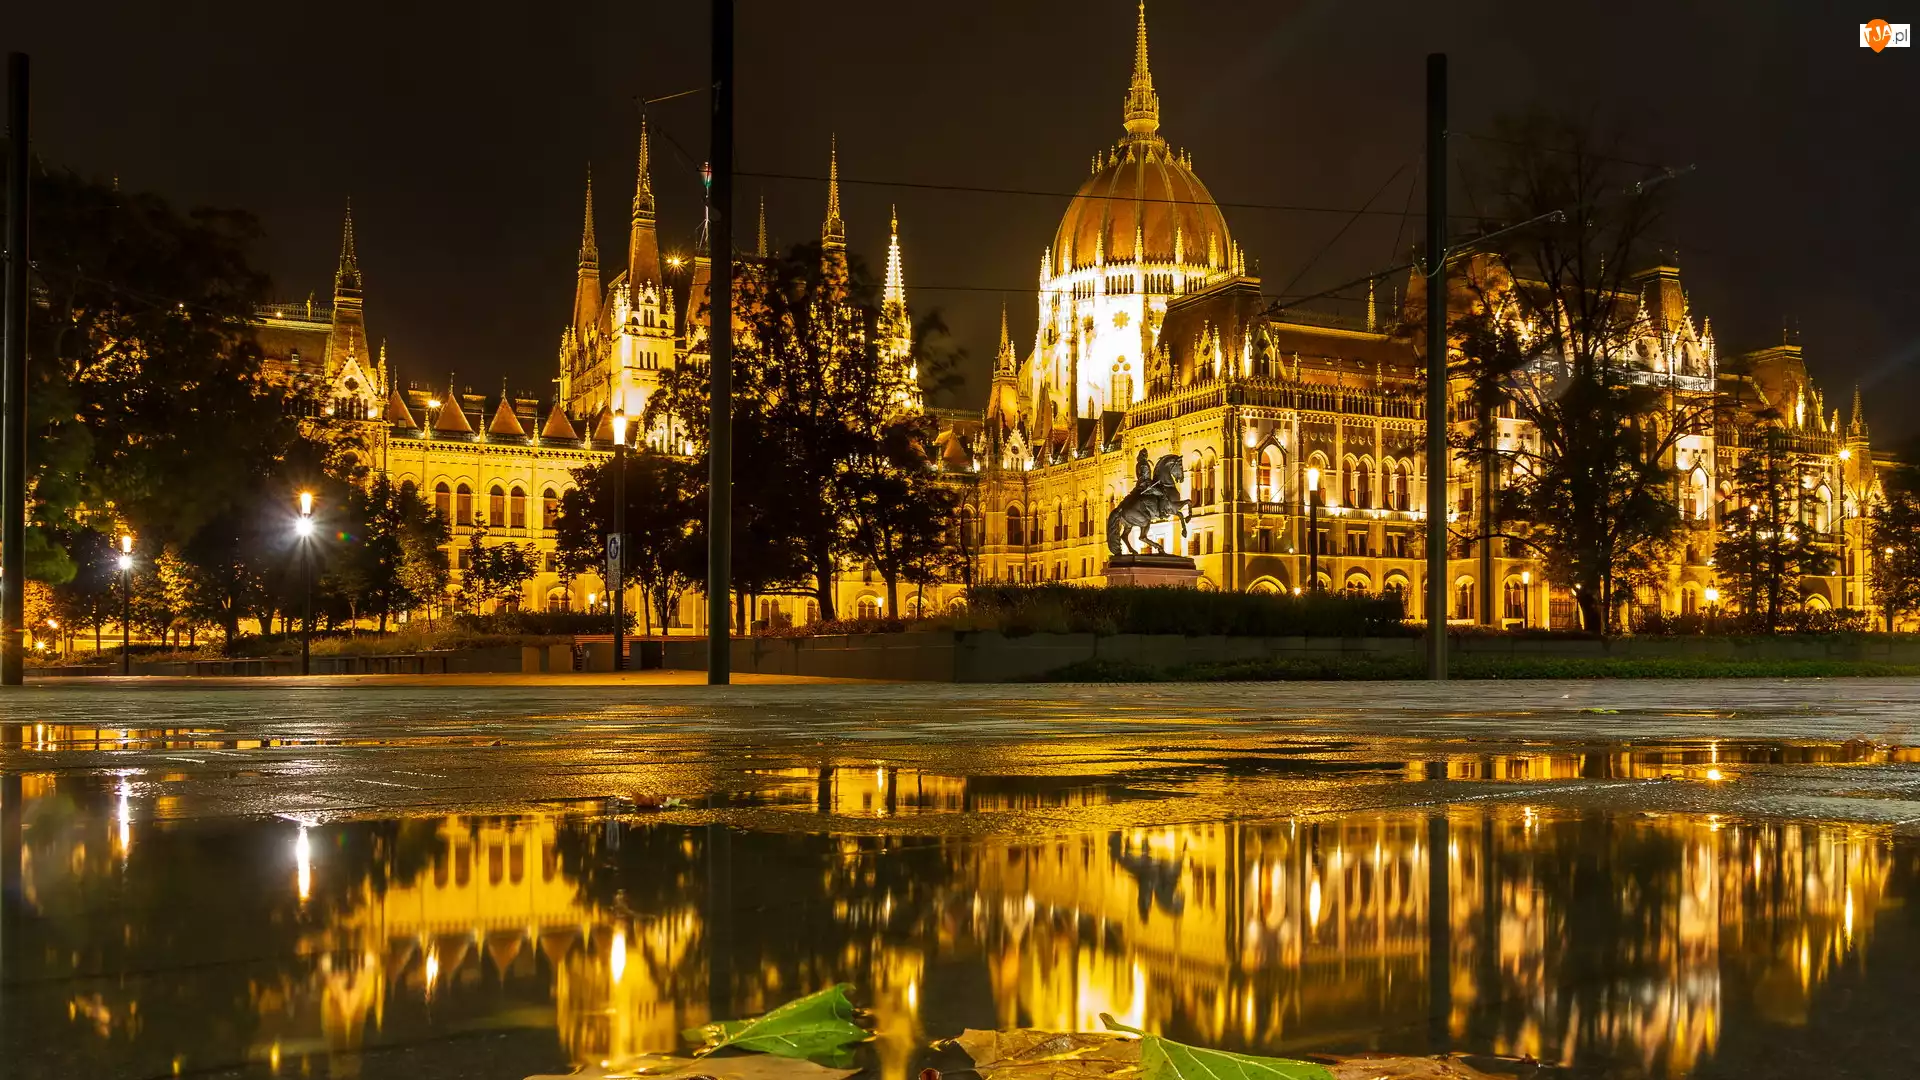 Parlament, Oświetlony, Noc, Węgry, Pomnik konny Franciszka II Rakoczego, Budapeszt